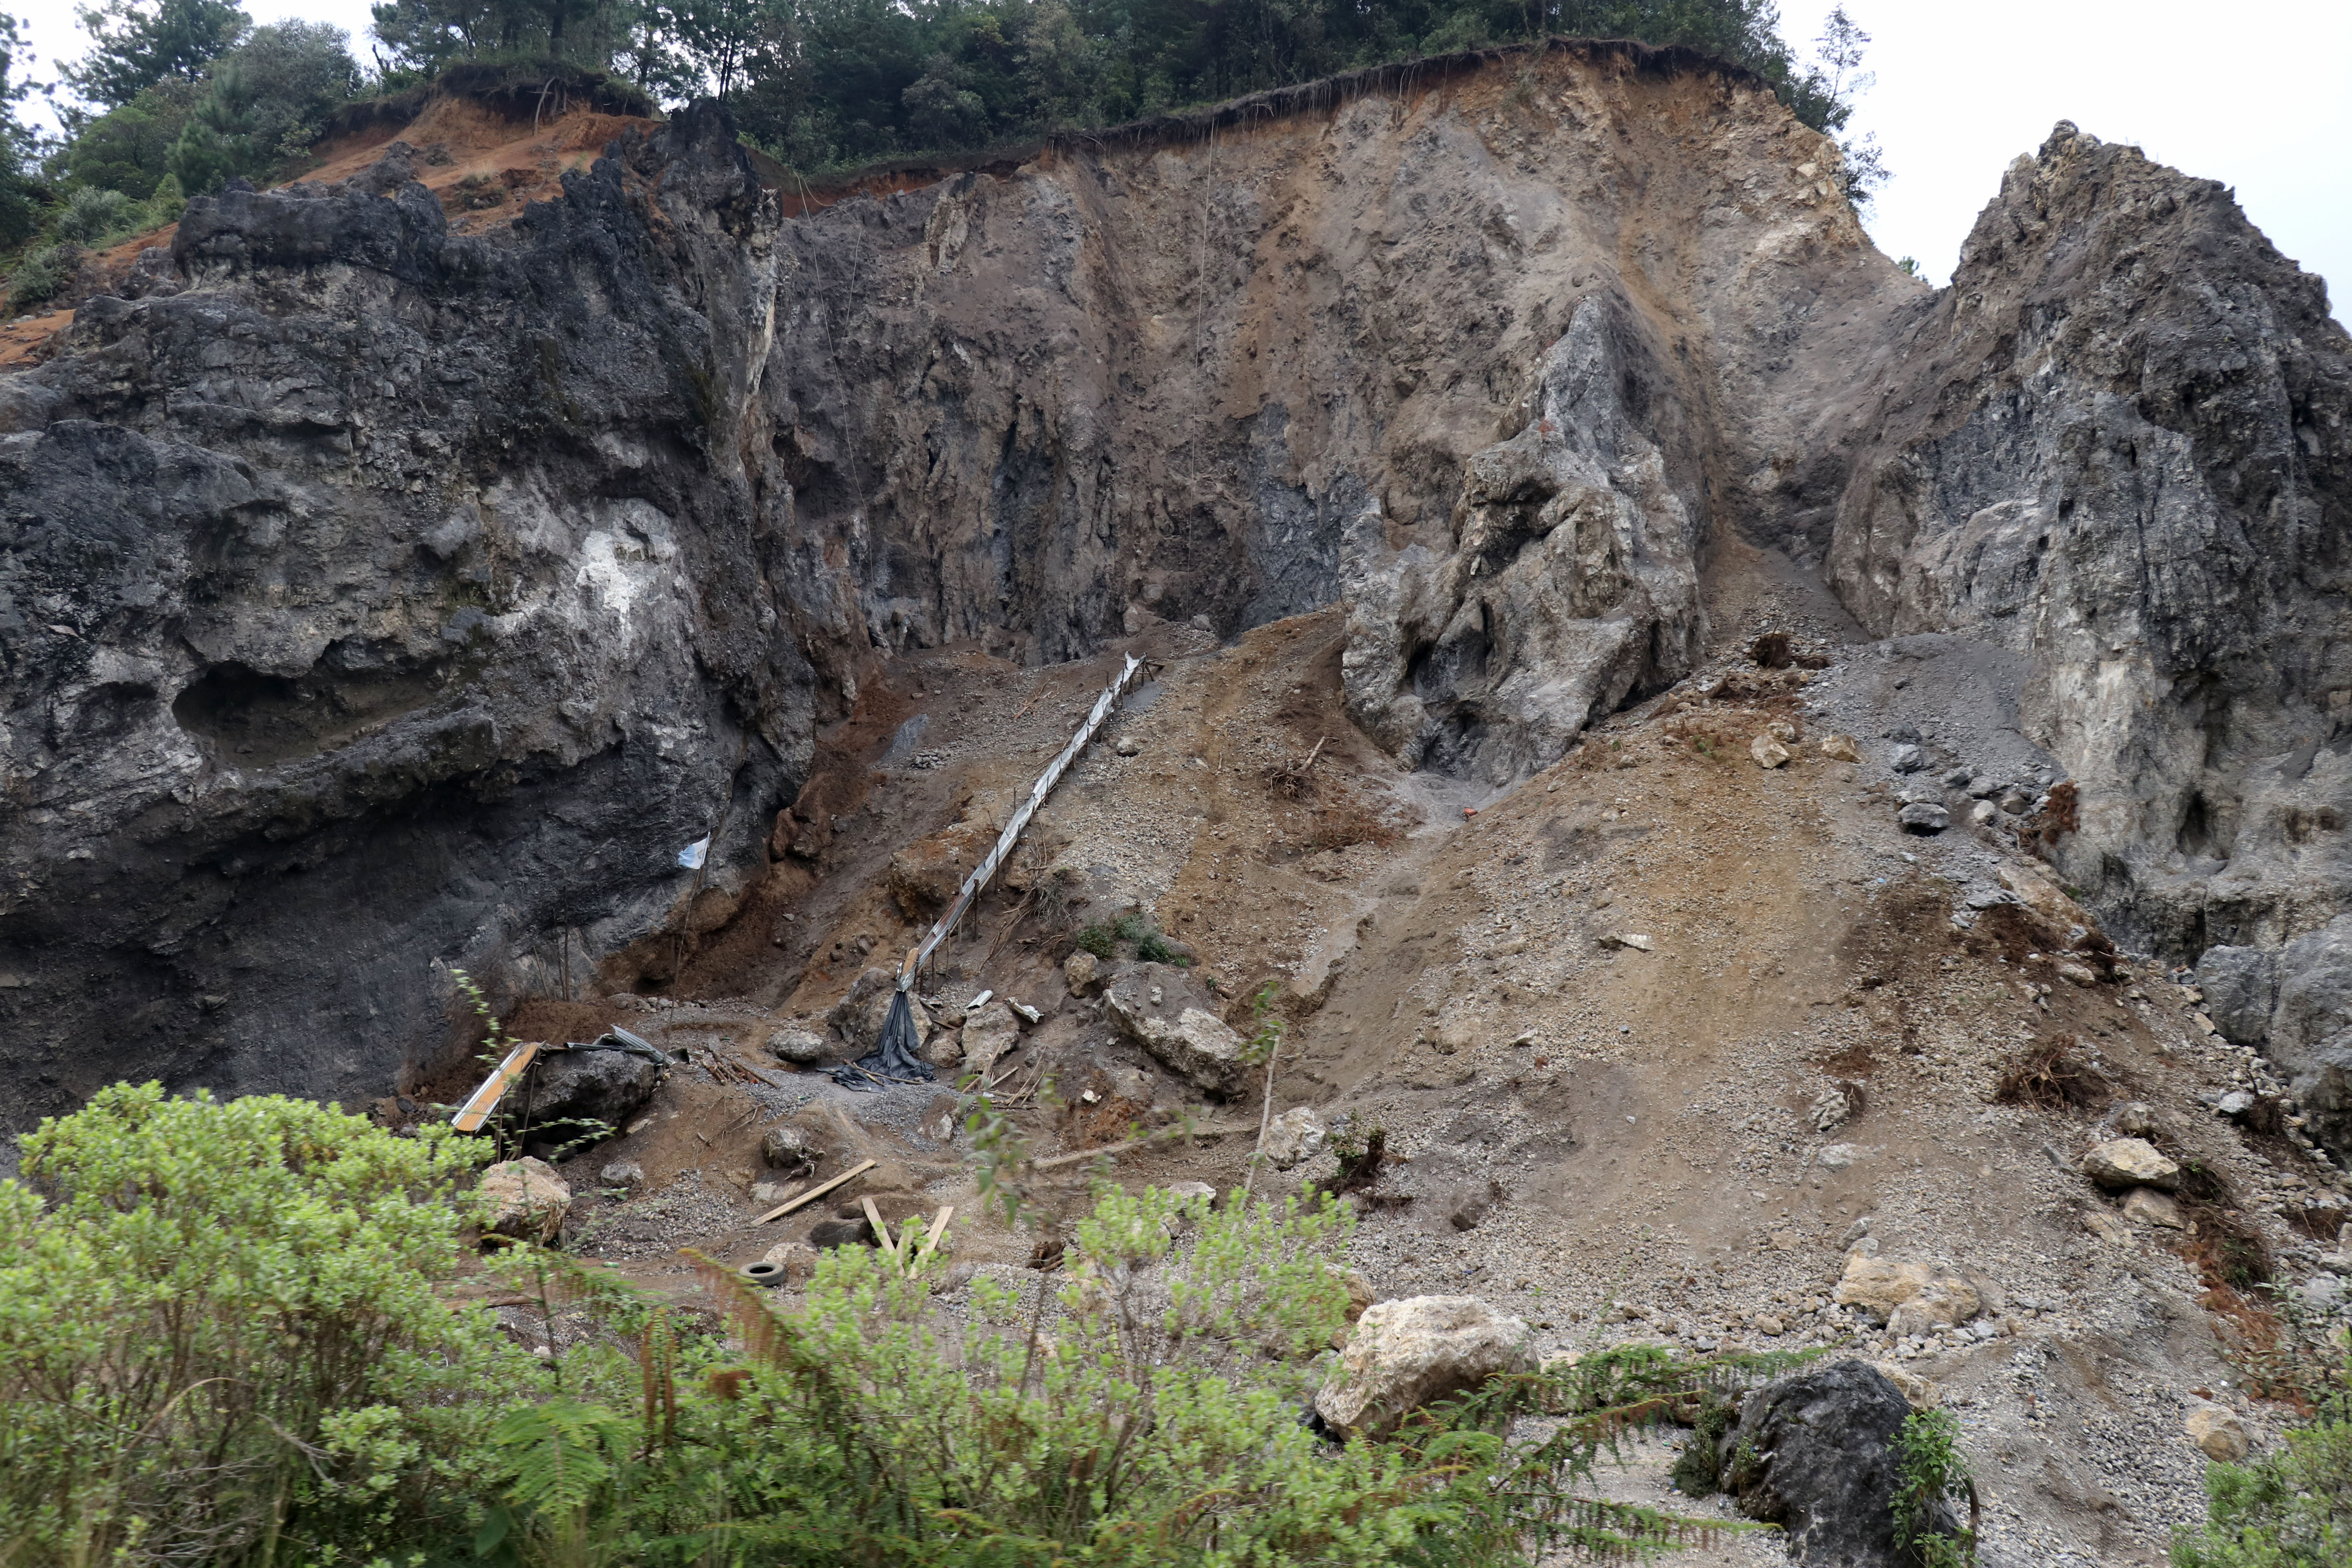 
Grandes cantidades de materiales para construcción son extraídas de las montañas de Huehuetenango. (Foto Prensa Libre: Mike Castillo)